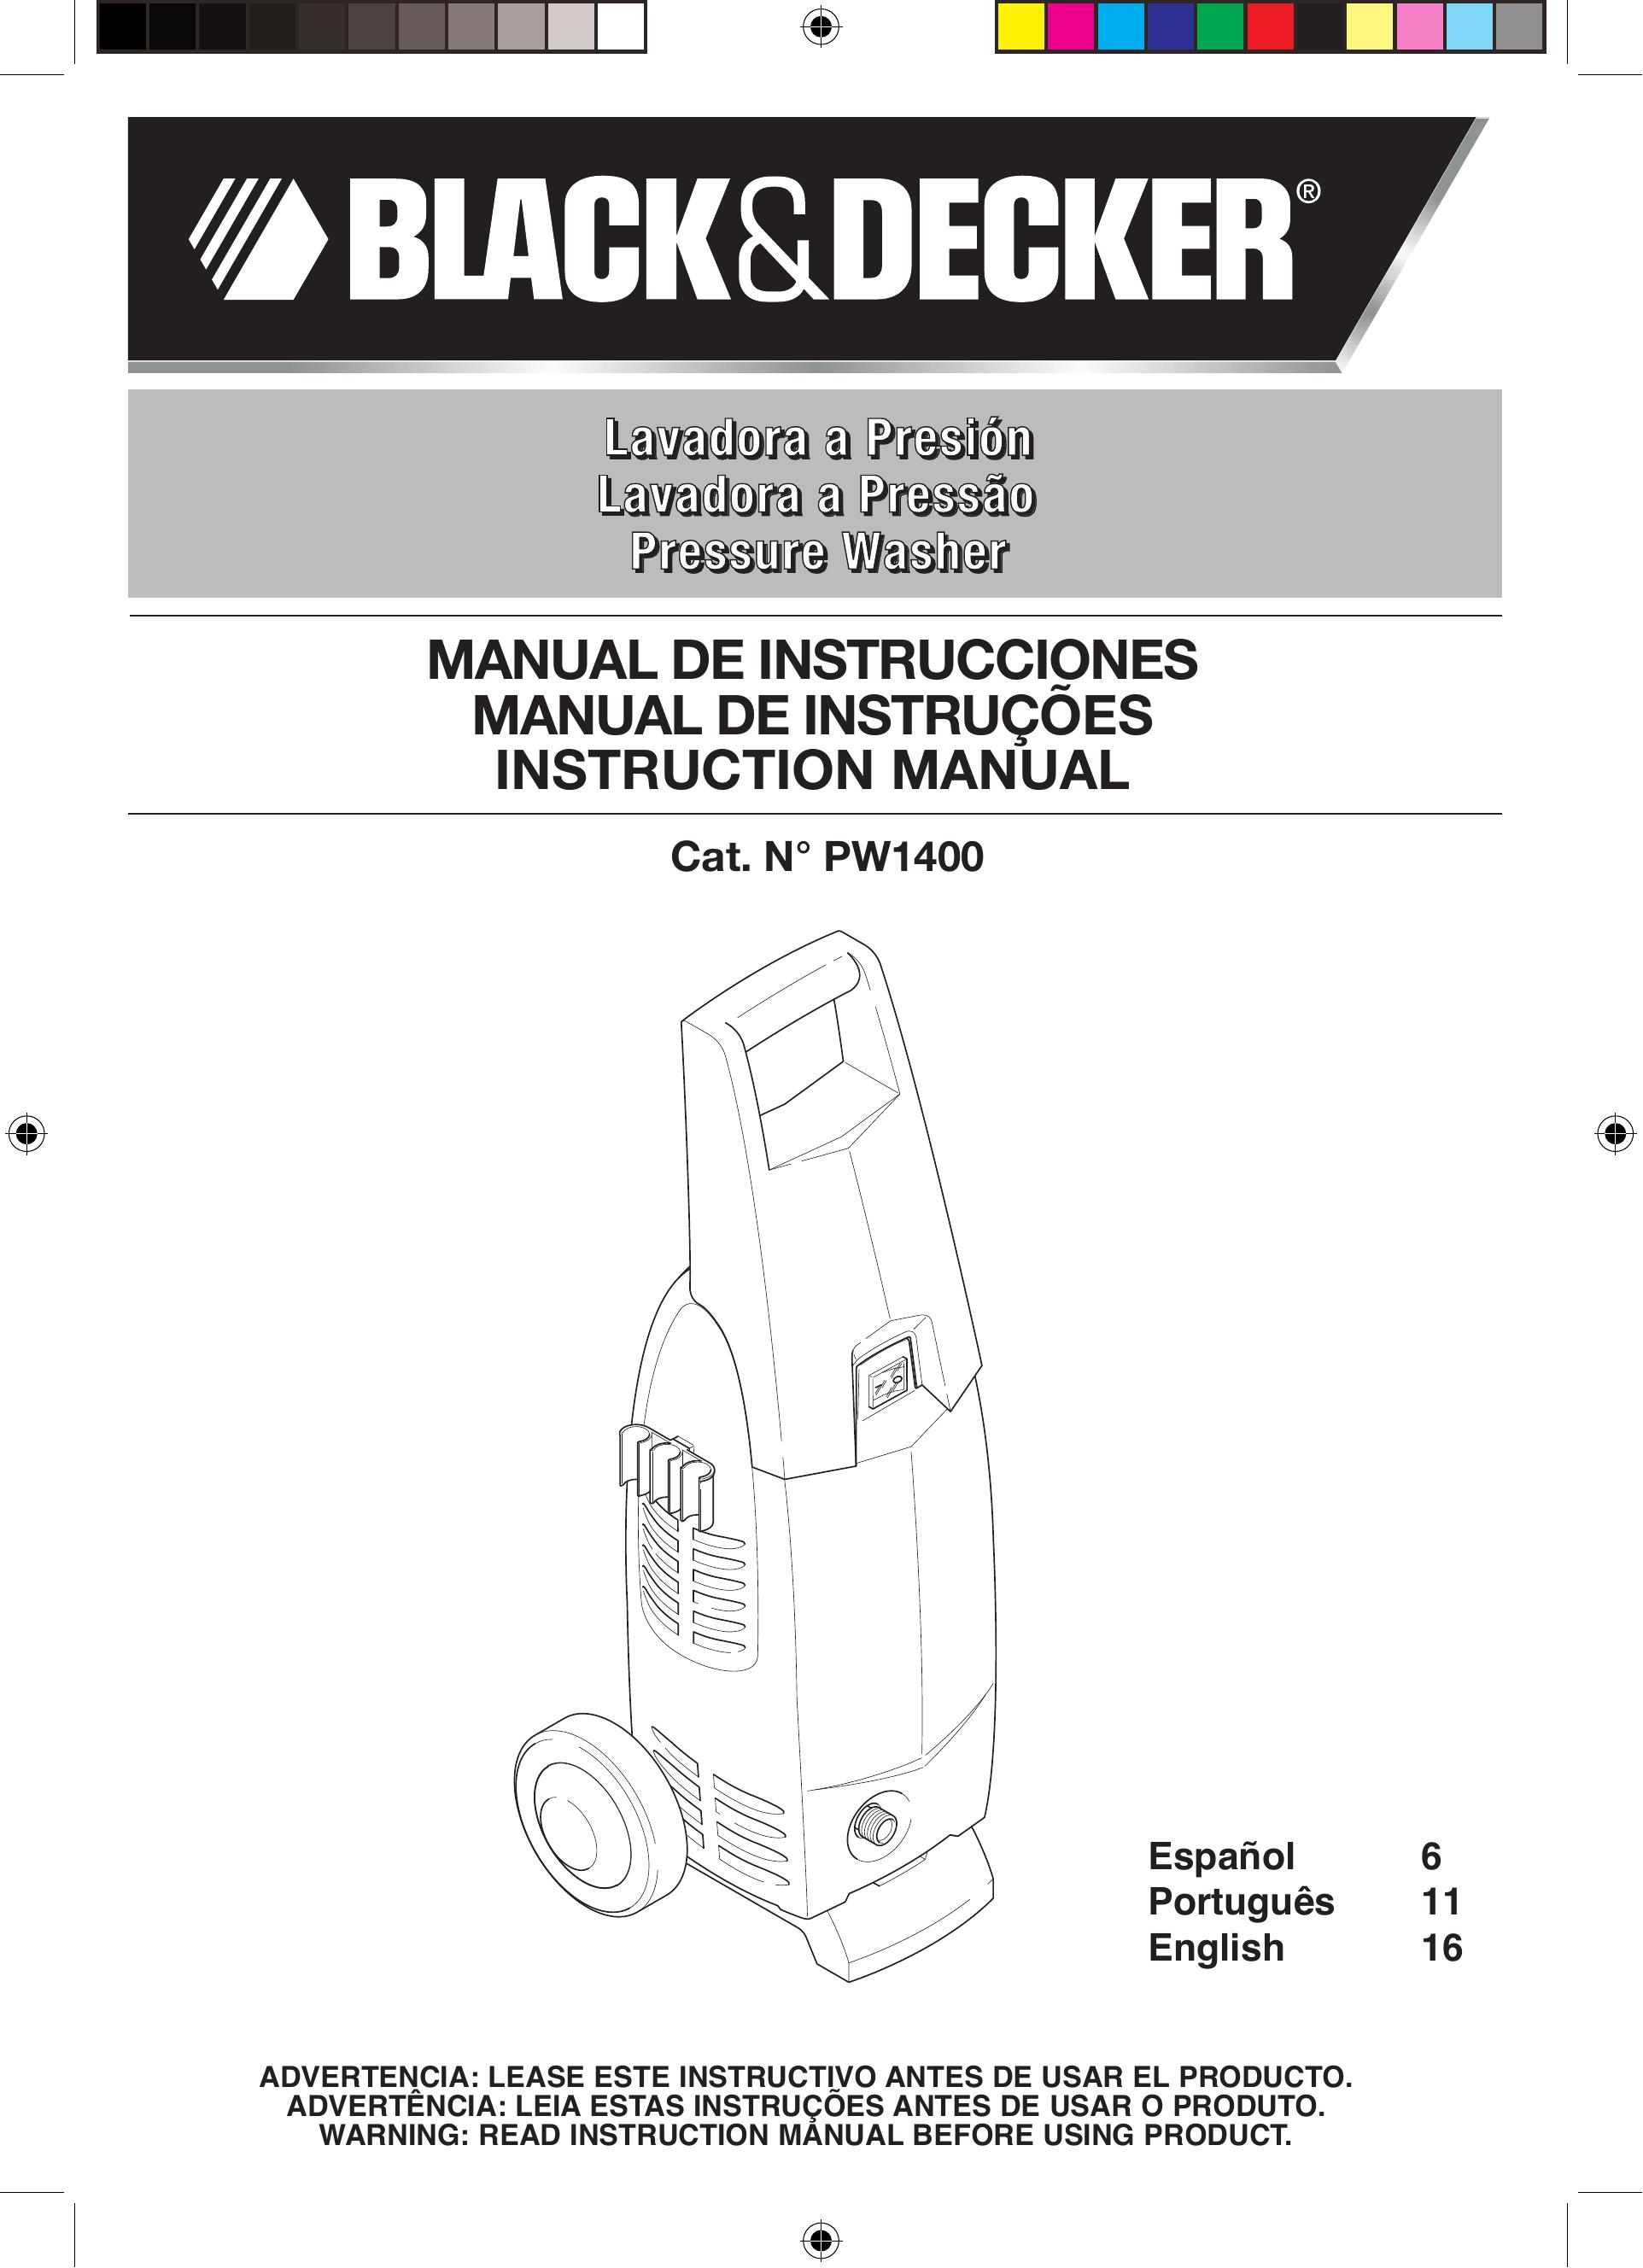 Black & Decker 662275-03 Pressure Washer User Manual